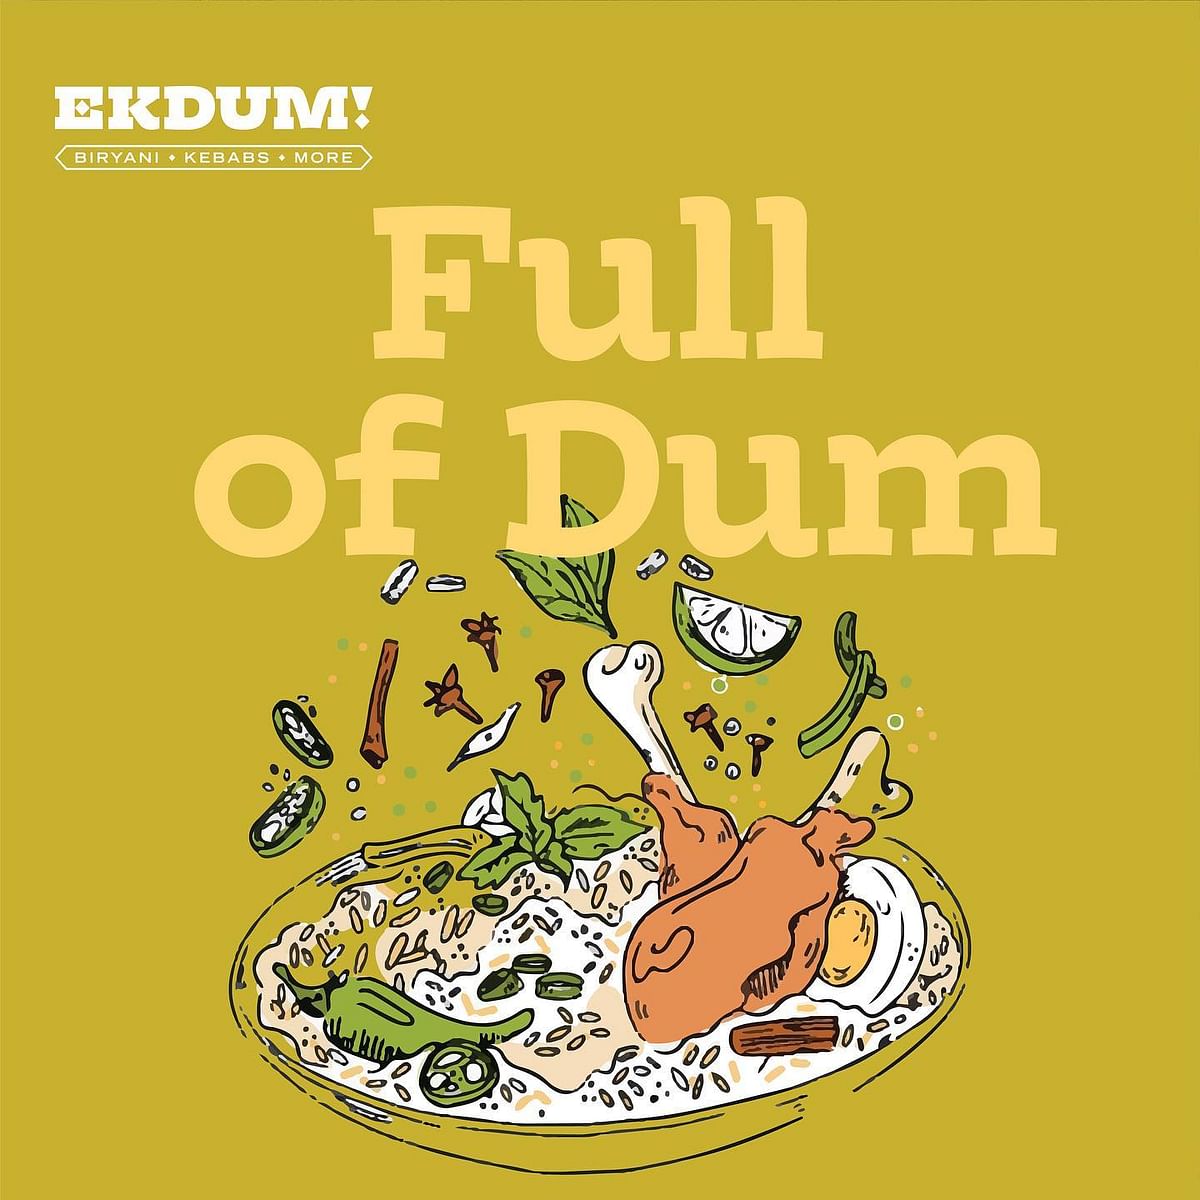 Domino's owner Jubilant FoodWorks enters biryani biz with ‘Ekdum!’